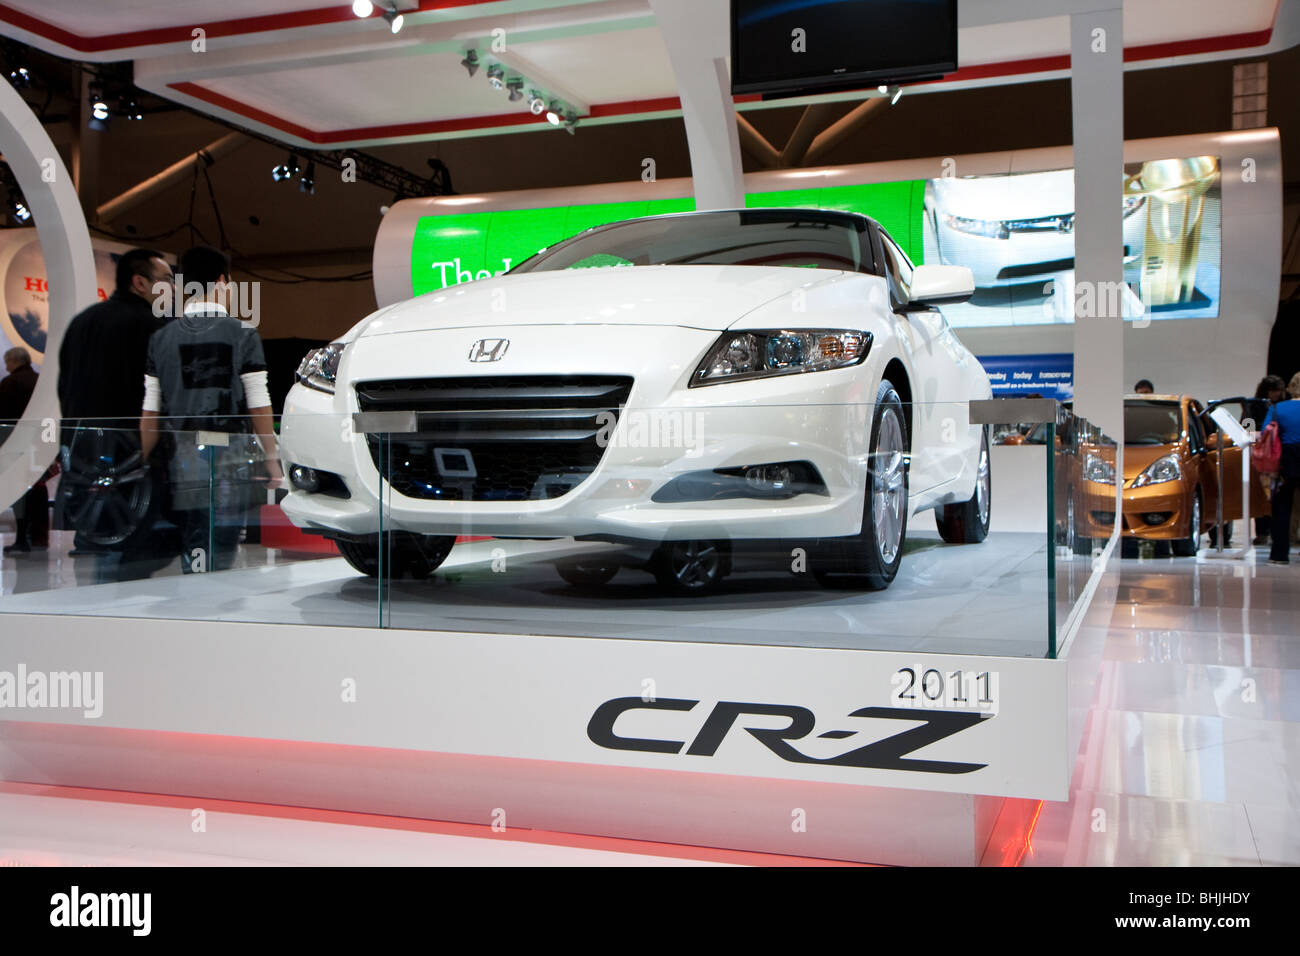 Honda CR-Z Intersection Photo Gallery